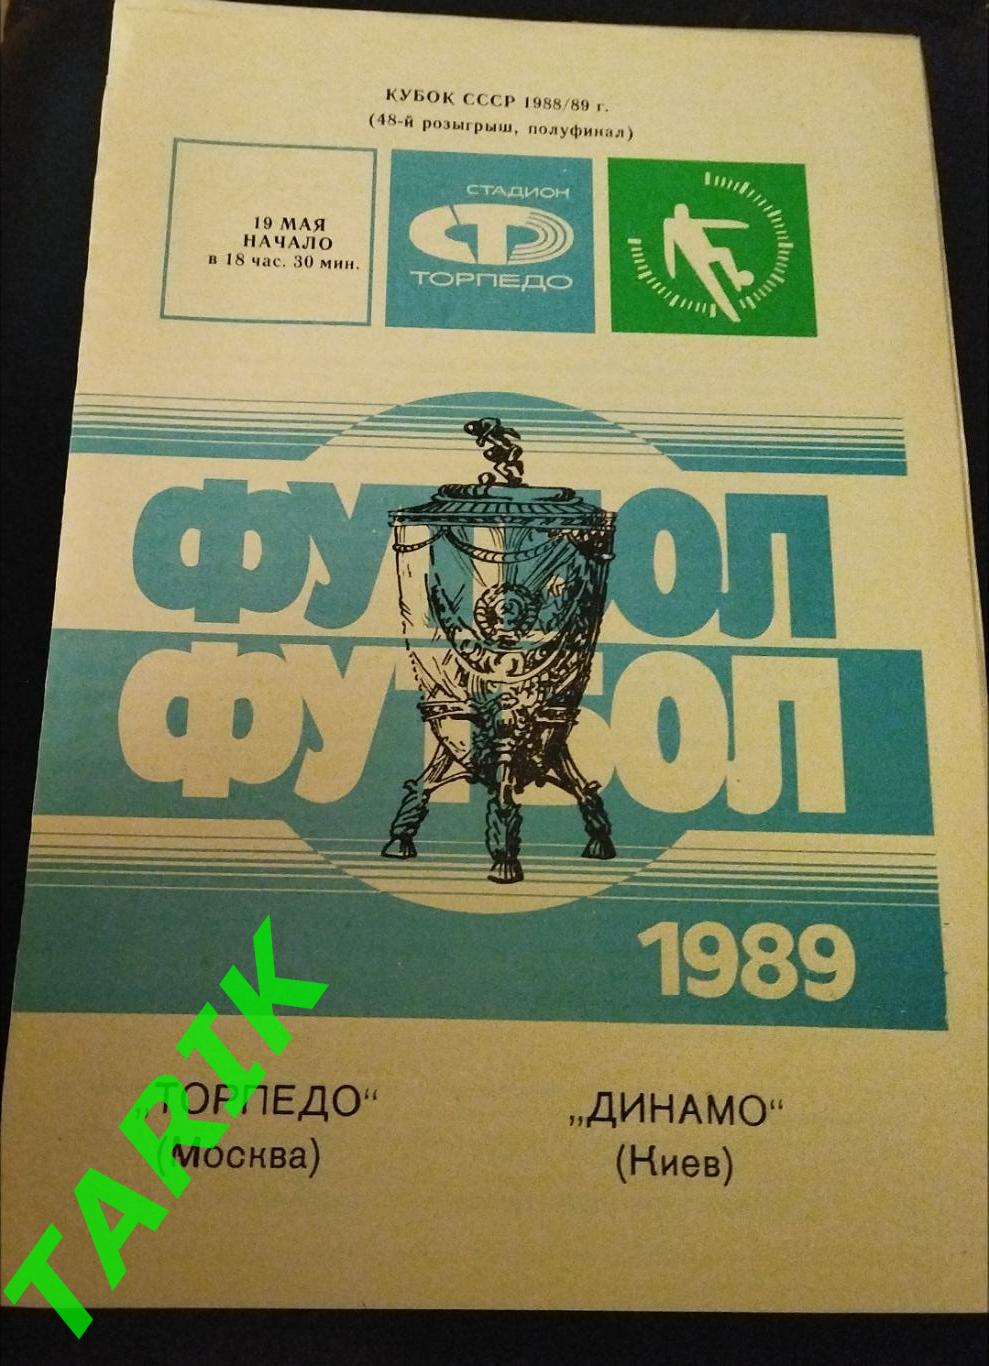 Торпедо Москва -Динамо Киев 1989 (Кубок СССР)